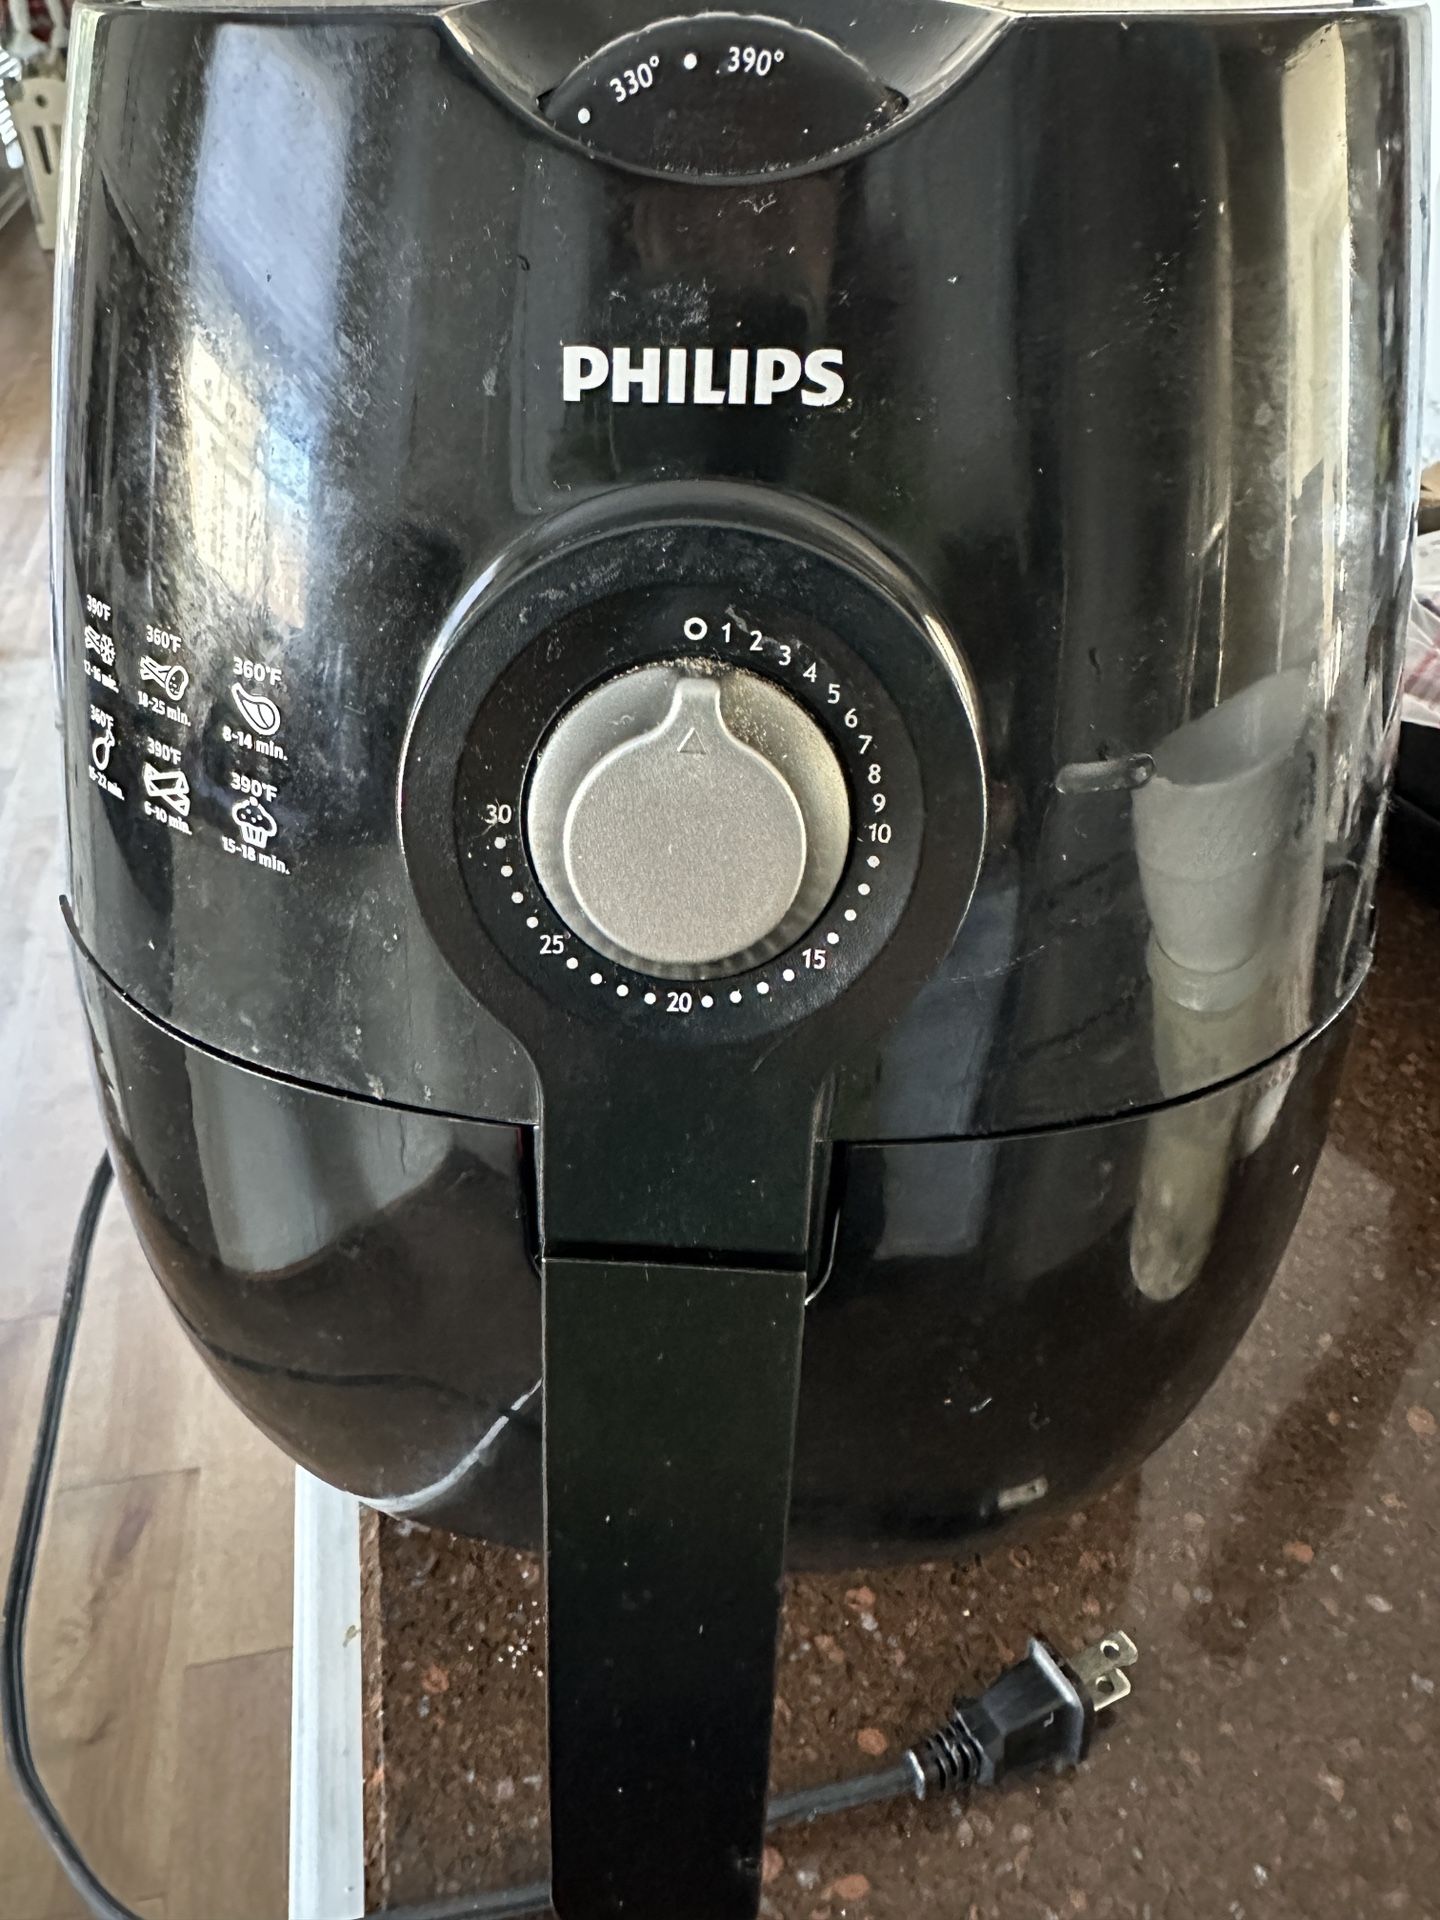 Philips Air fryer